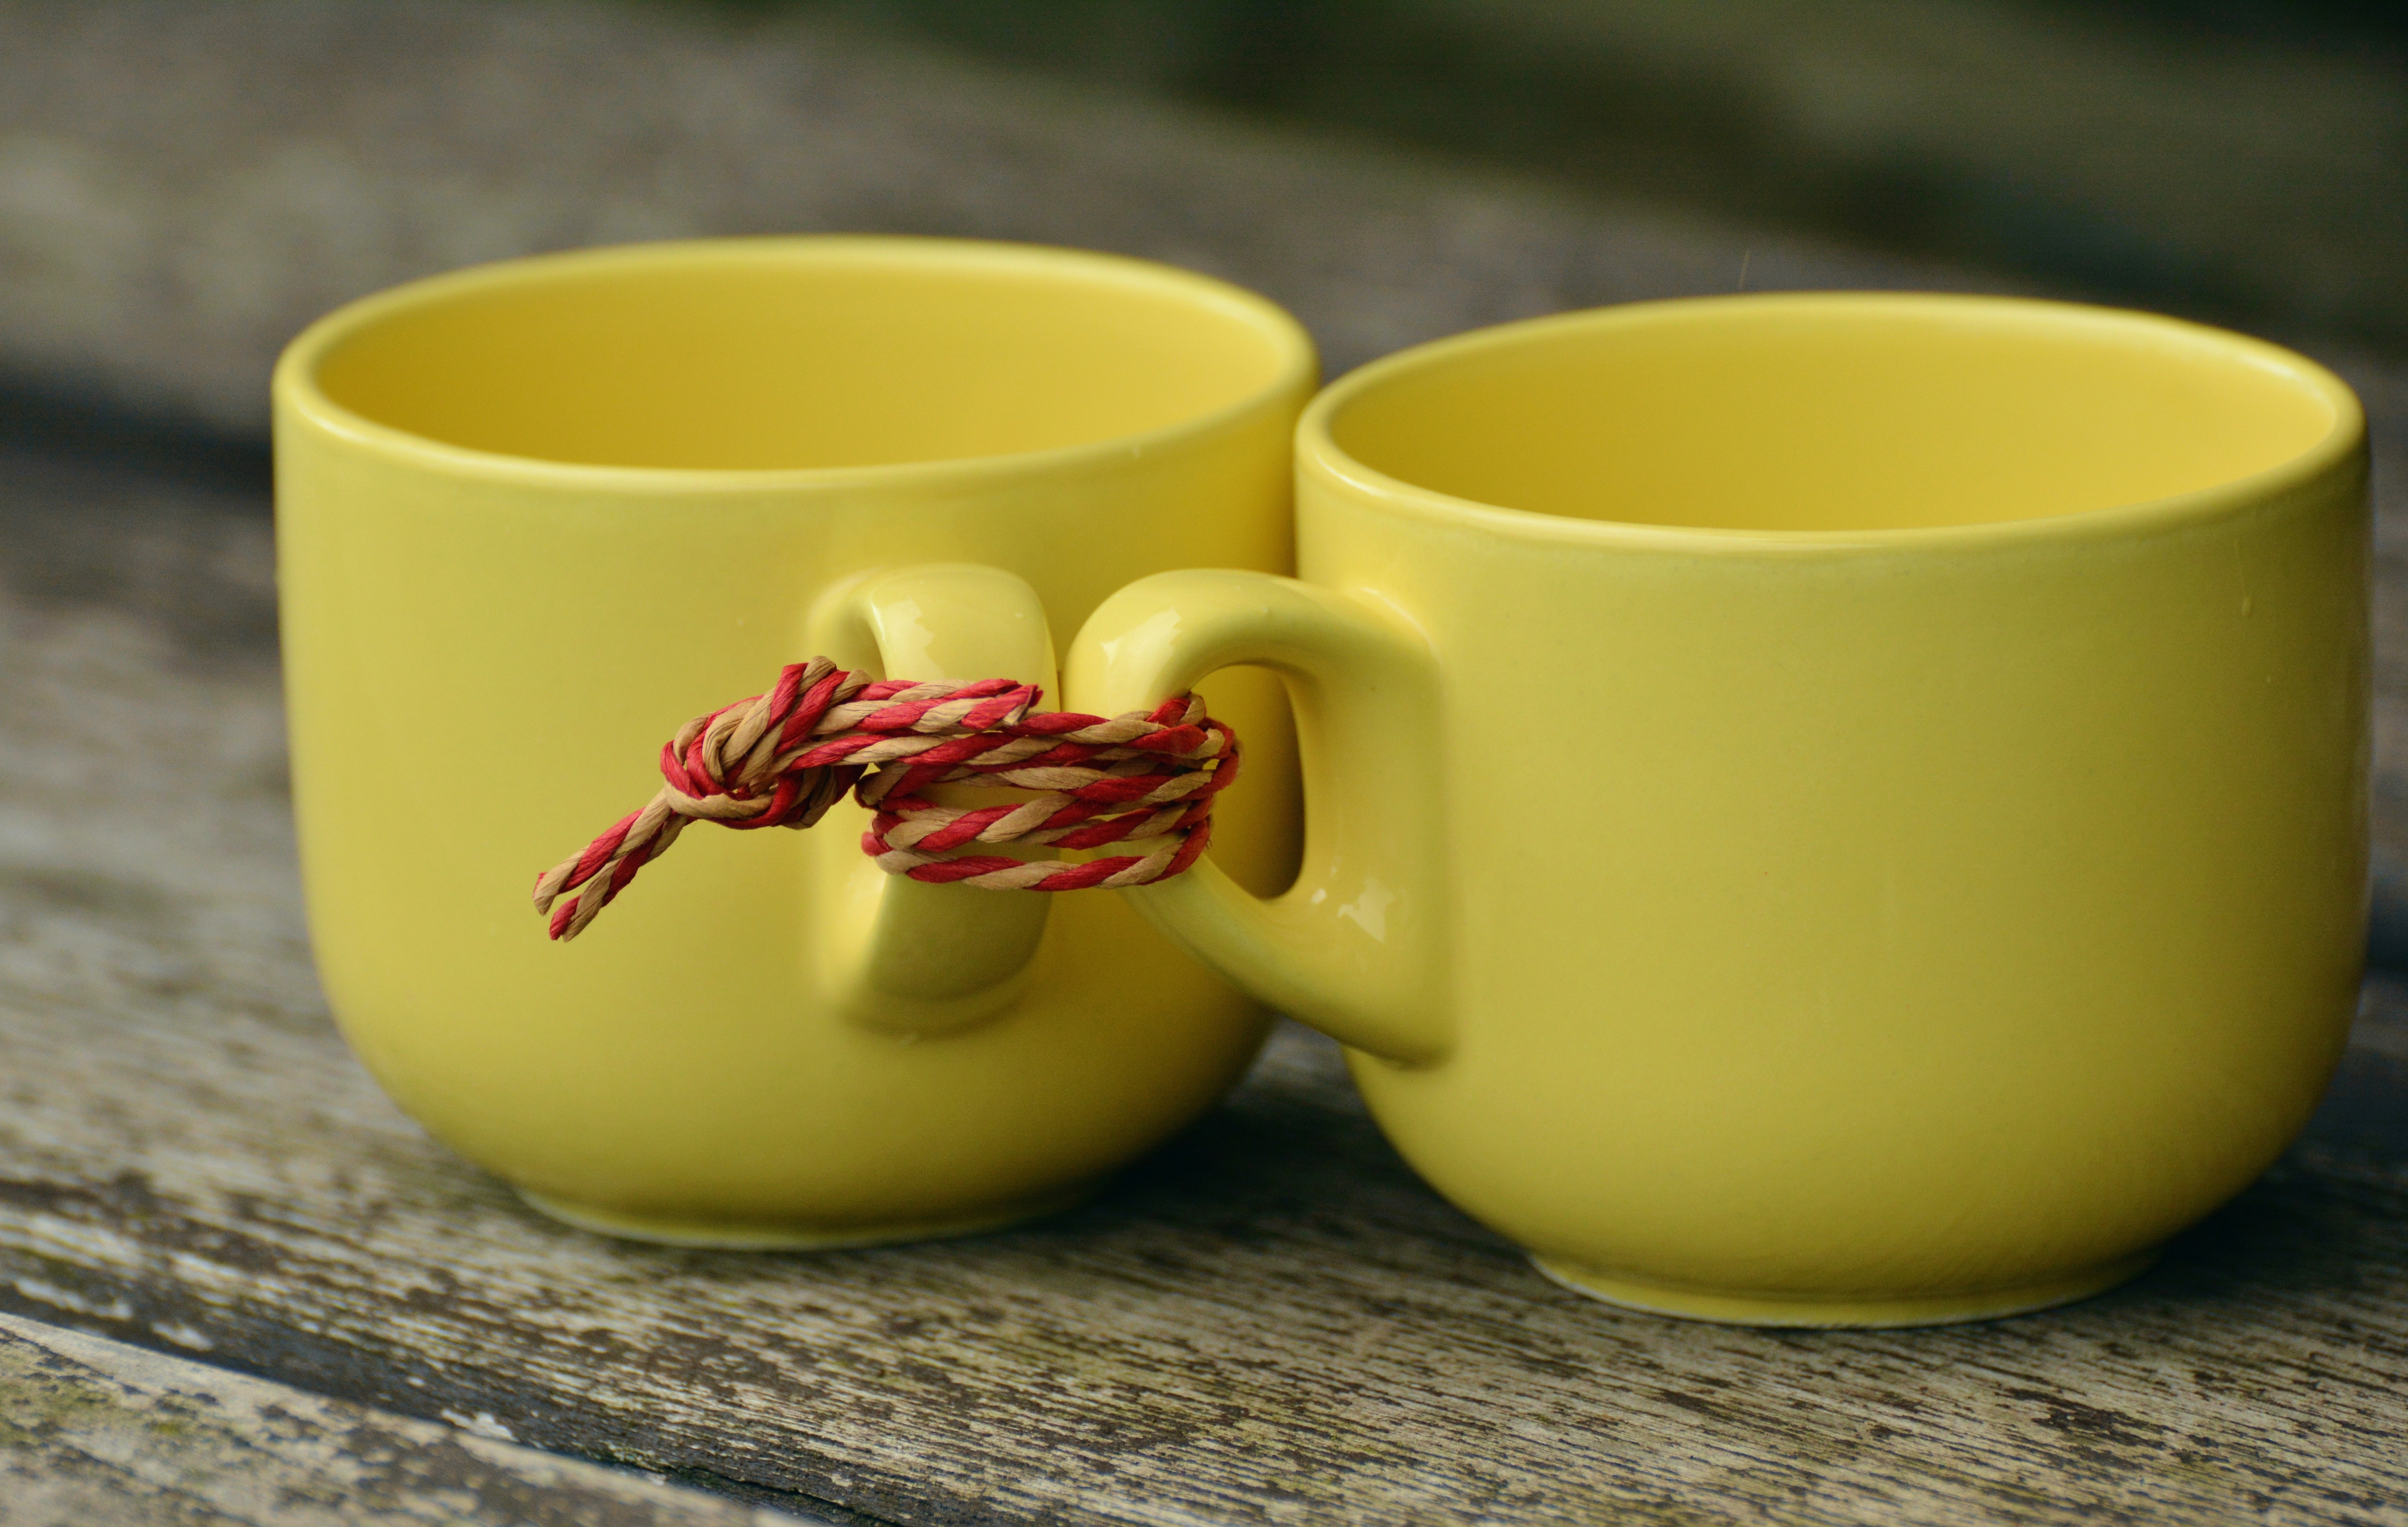 2 yellow ceramic teacup